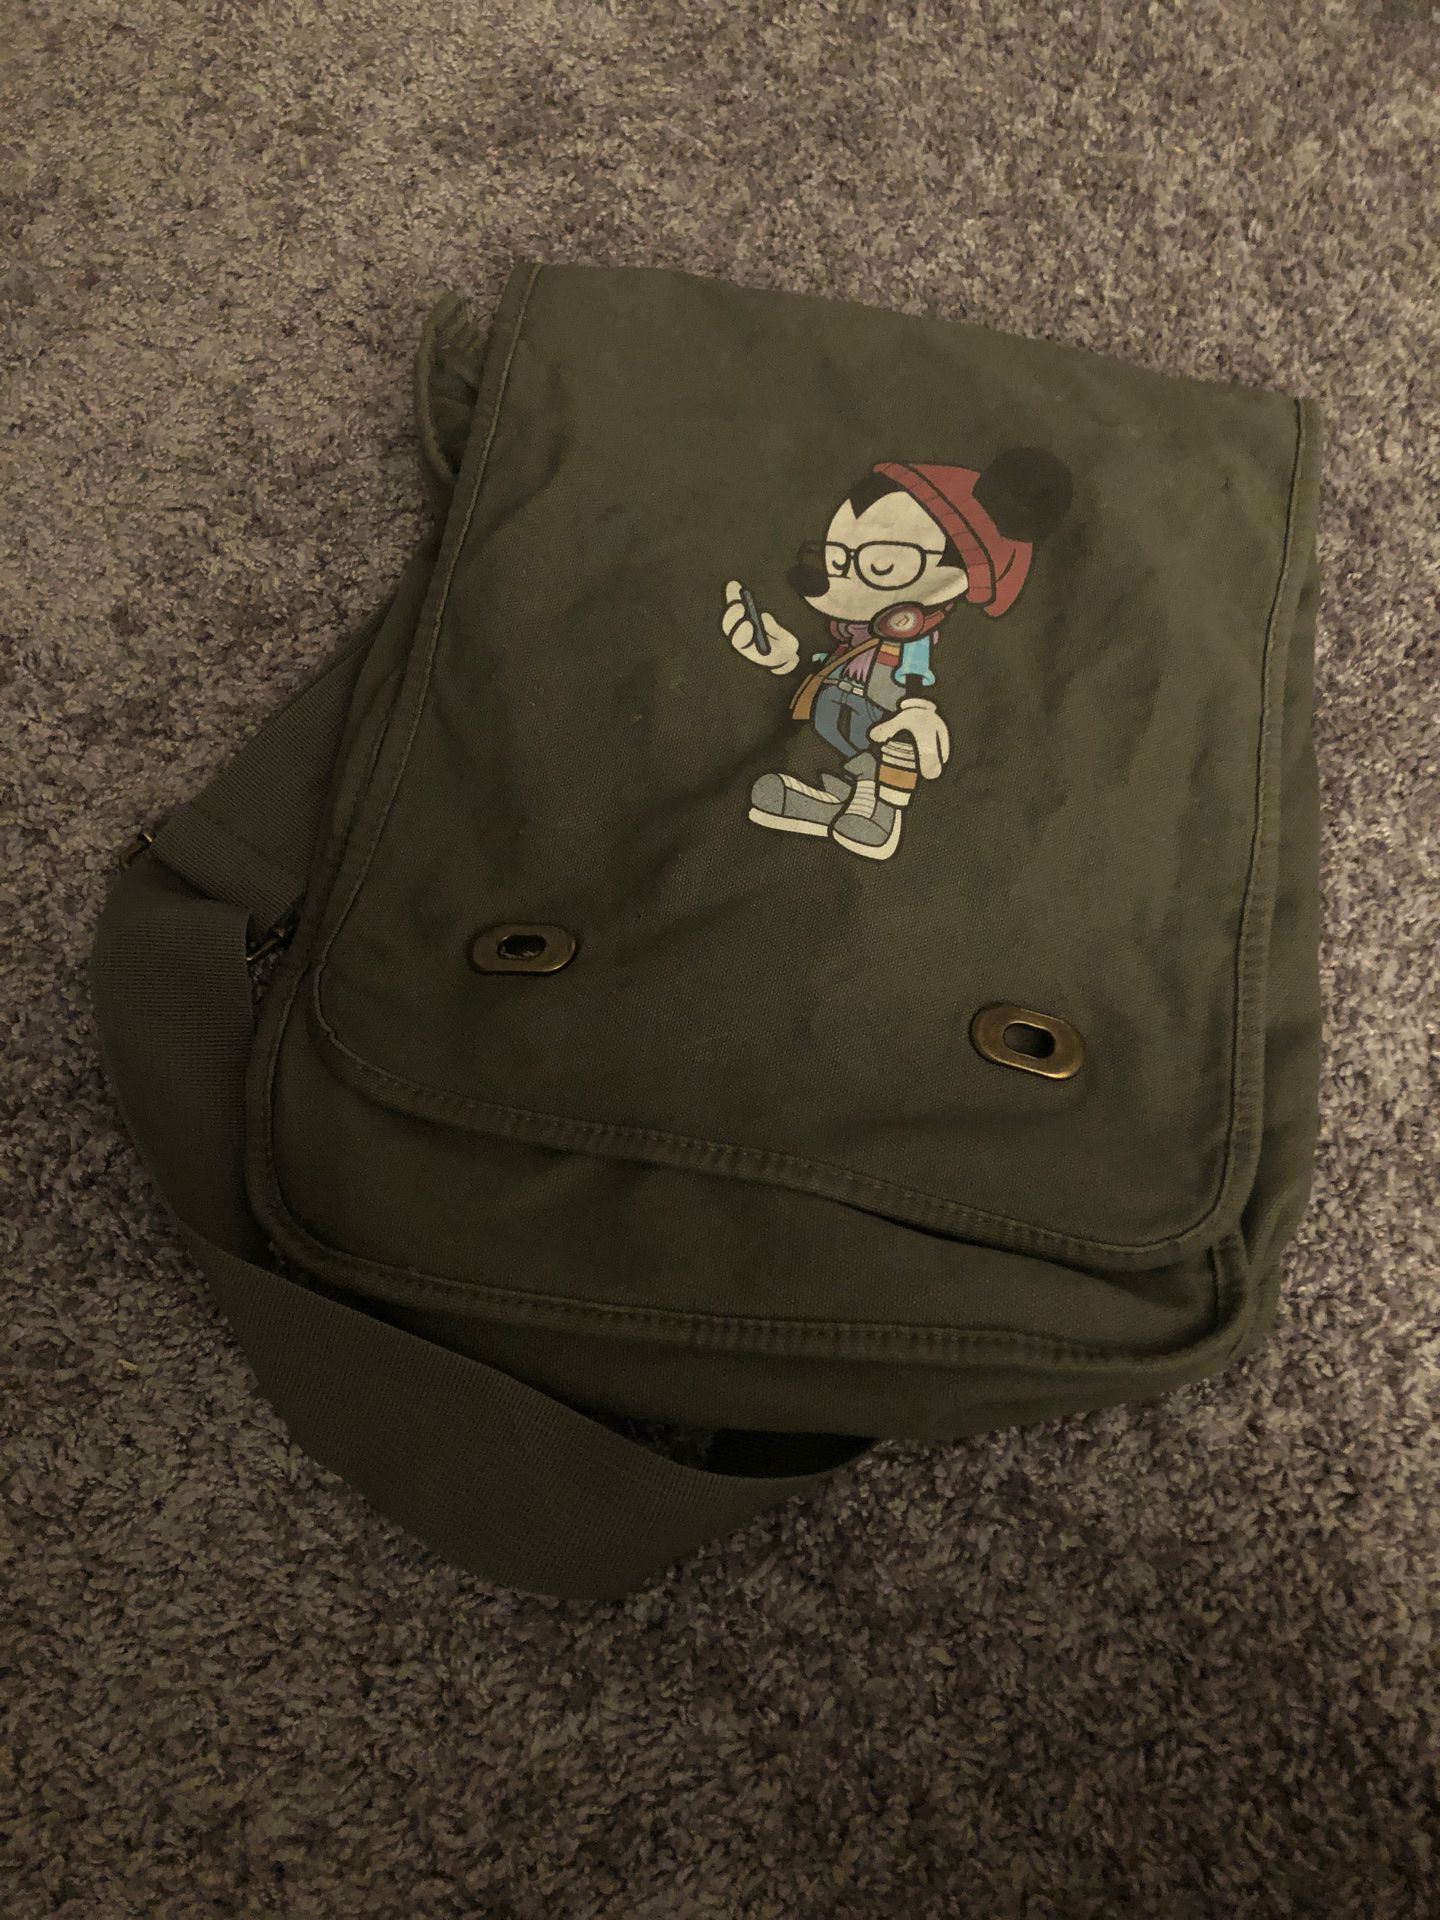 Mickey Mouse messenger bag